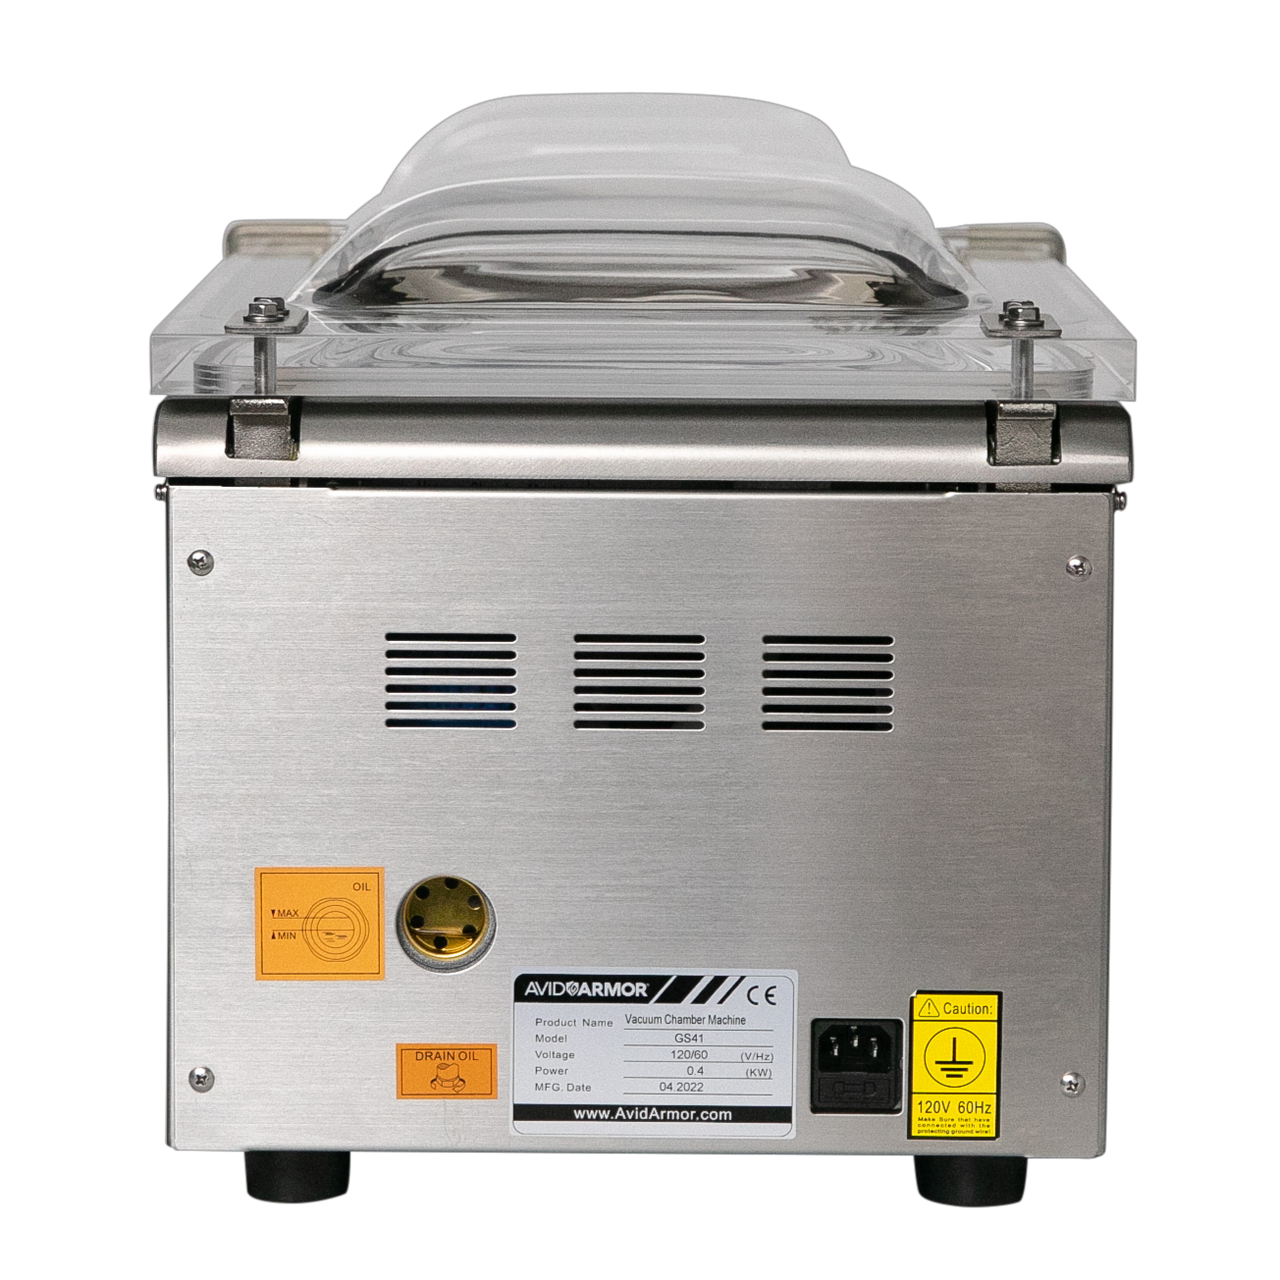 Avid Armor Chamber Vacuum Sealer Euro Series ES41 Oil Pump Machine